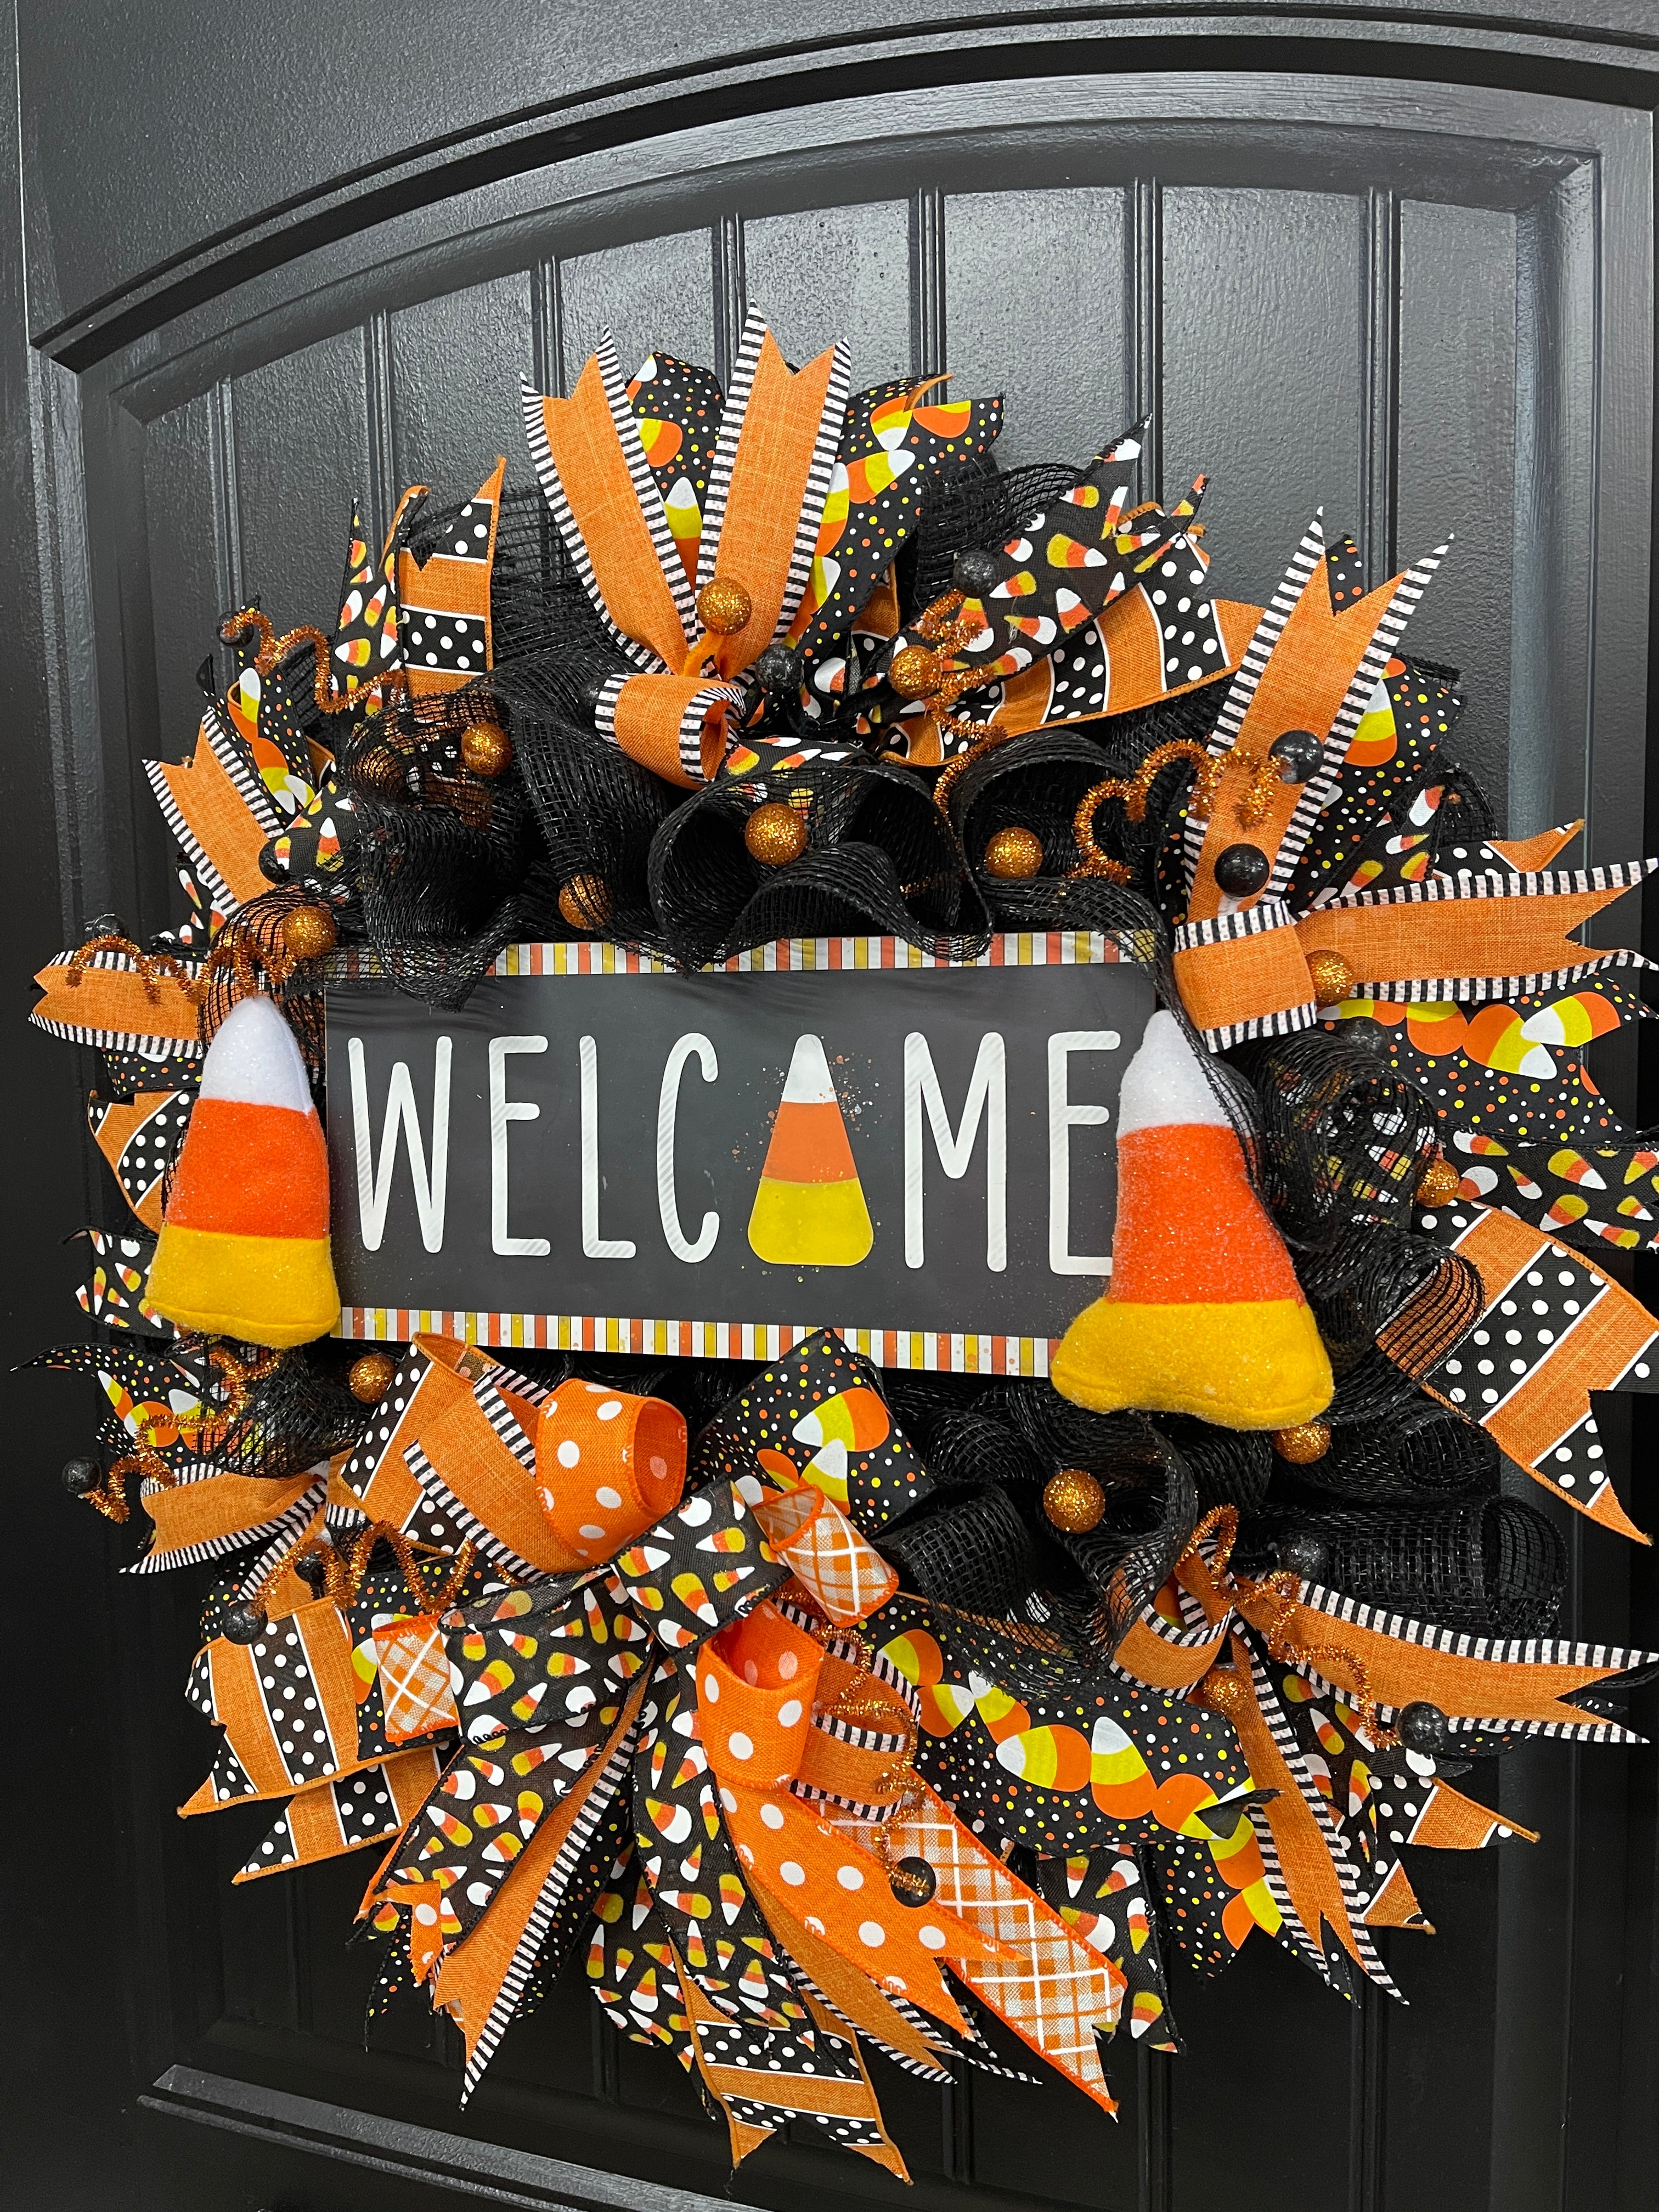 Candy Corn Welcome Wreath for Halloween, KatsCreationsNMore